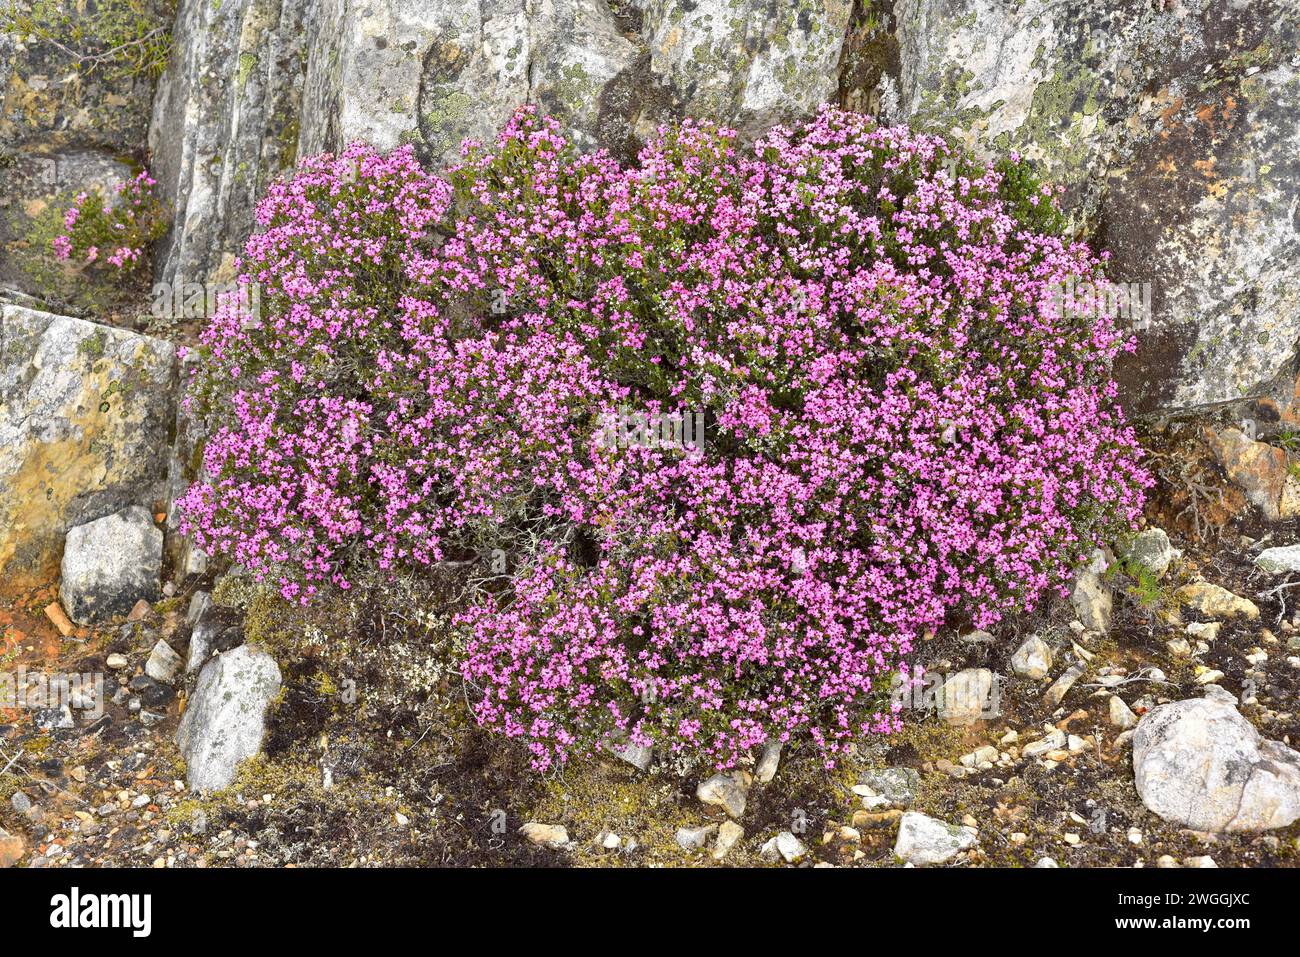 Brezo rubio or Spanish heath (Erica australis) is an evergreen shrub native to western Iberian Peninsula. This photo was taken in northern Leon provin Stock Photo